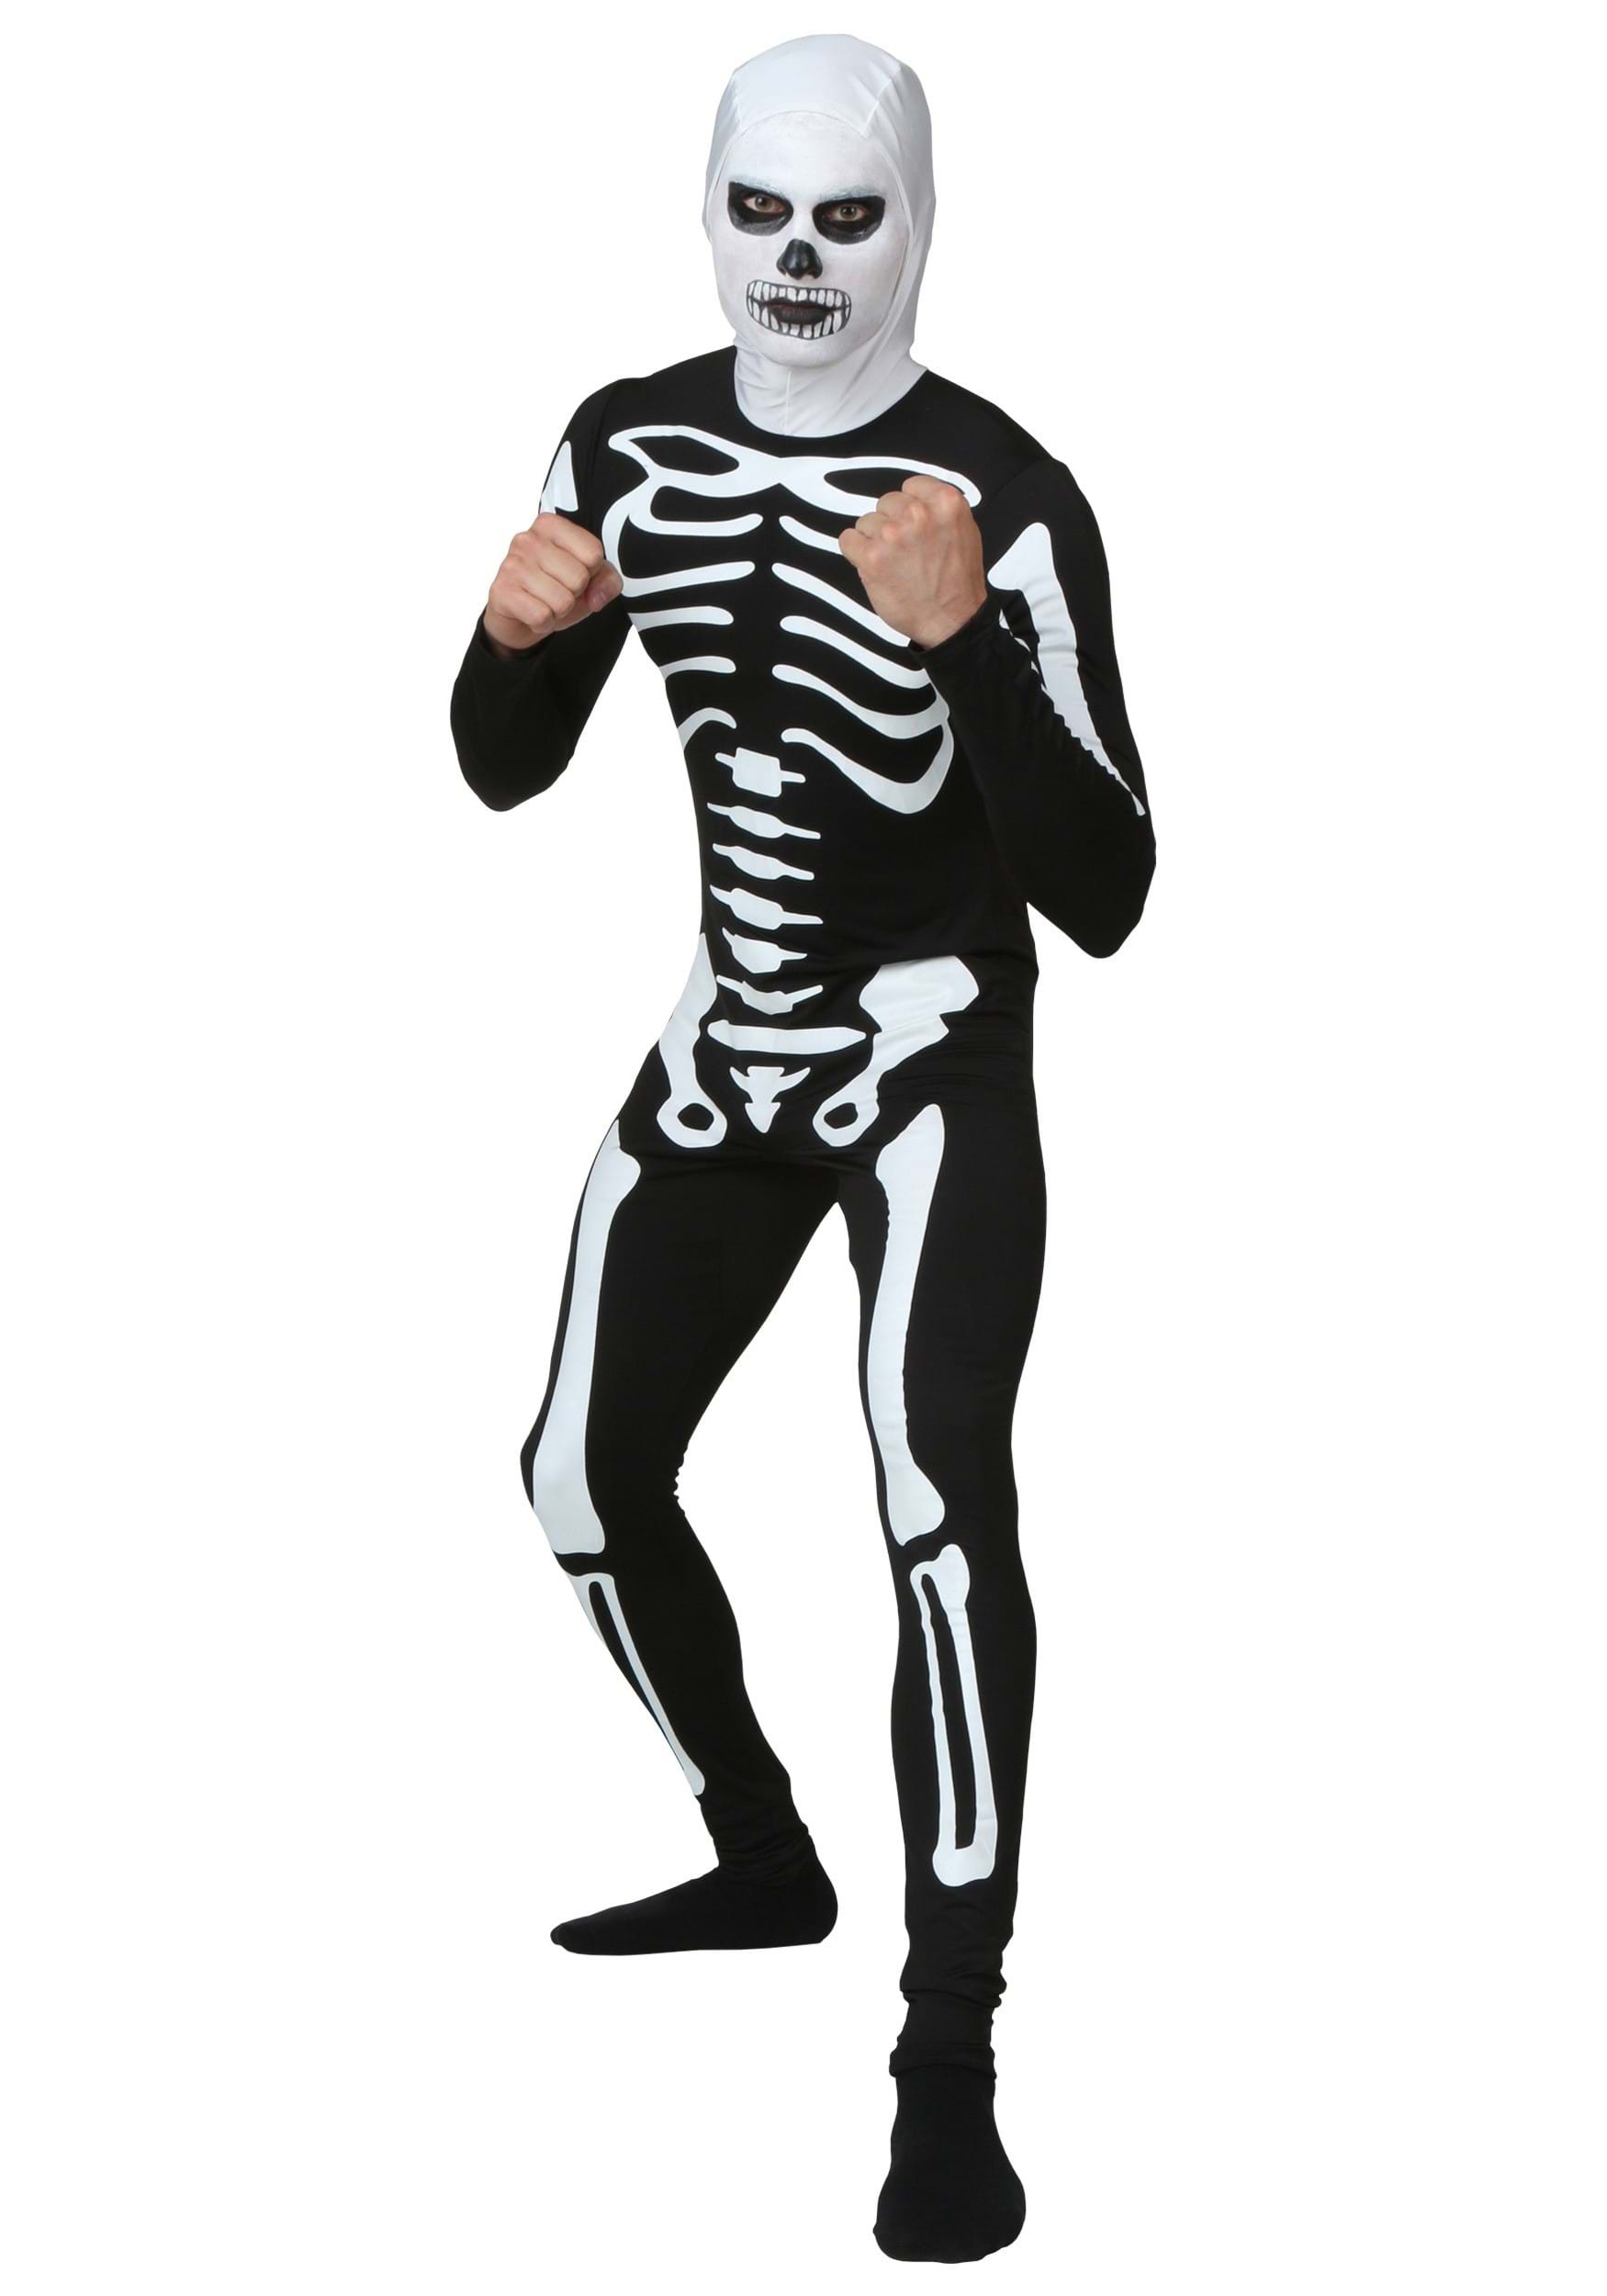 Photos - Fancy Dress KID FUN Costumes Men's Plus Size Skeleton Suit Costume from the Karate  Bla 